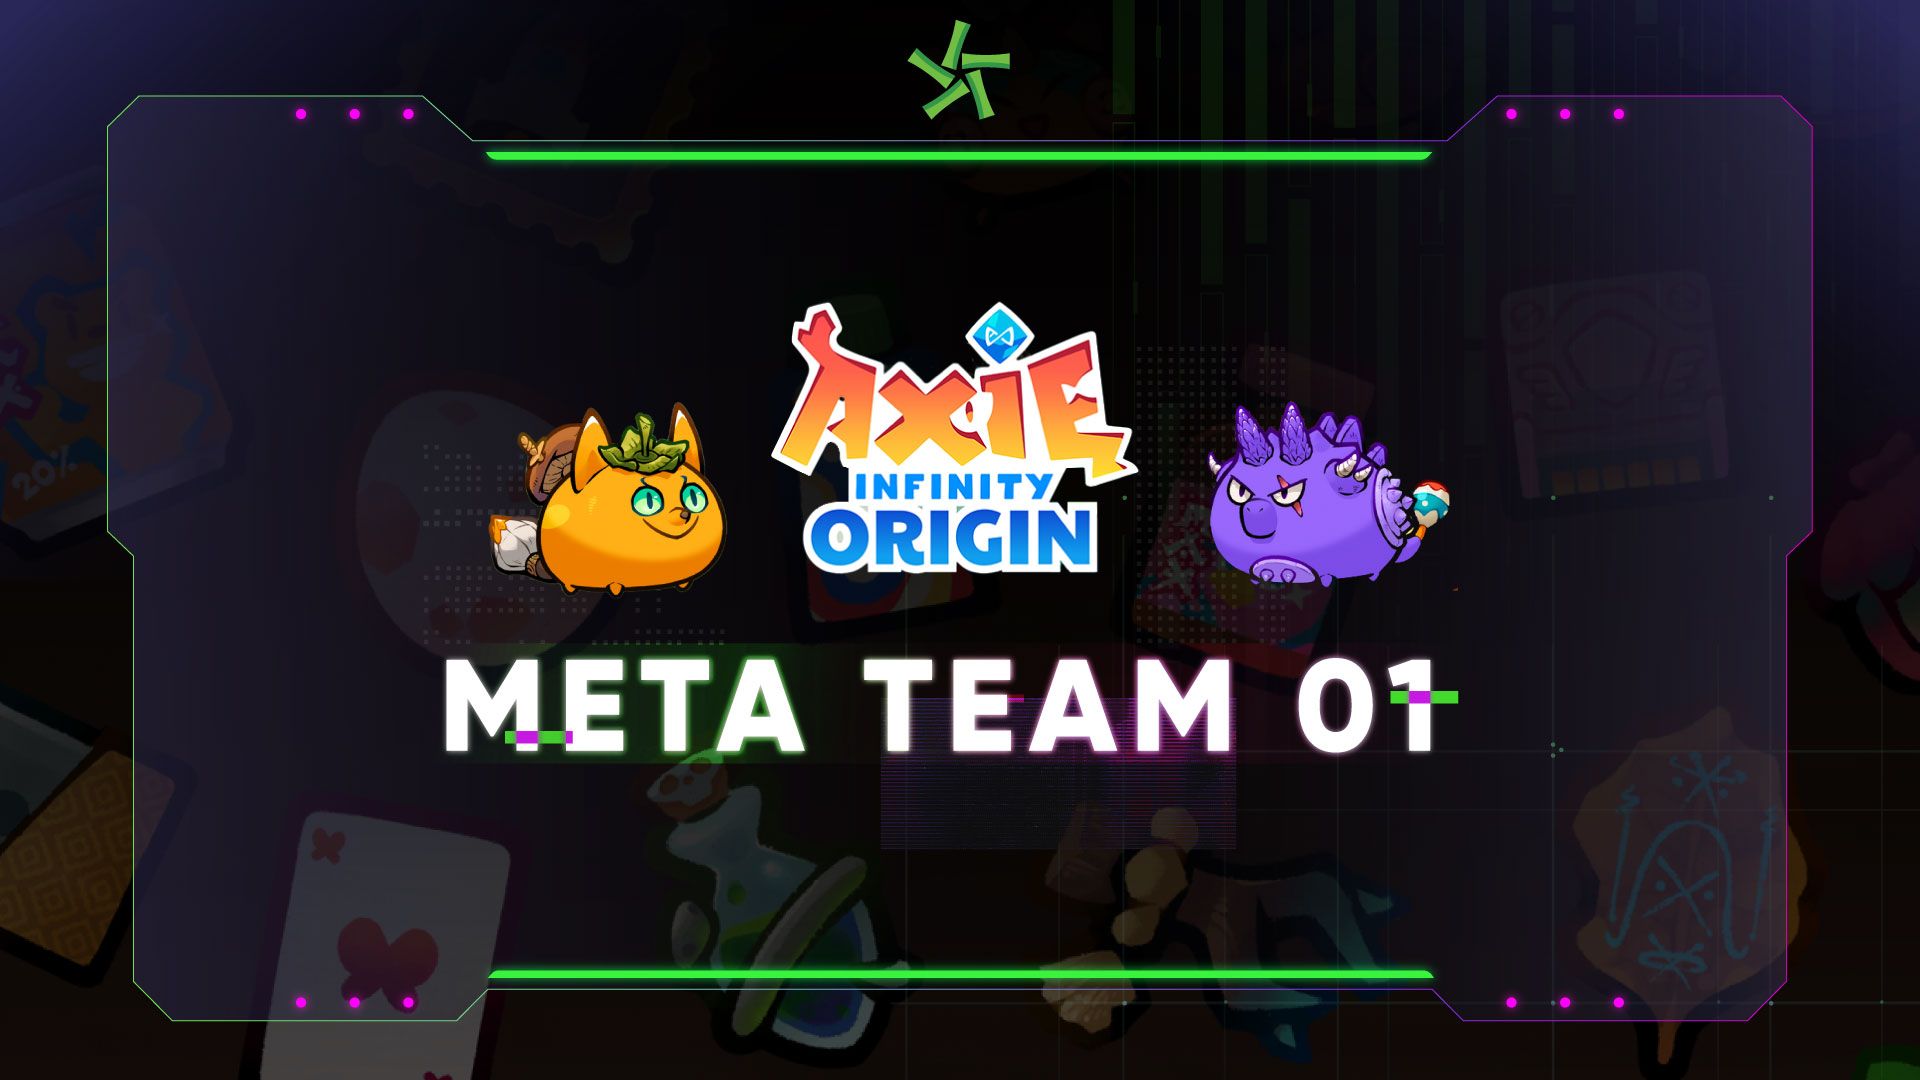 Axie Infinity Origin Meta Team 1 - Triple Aqua Team